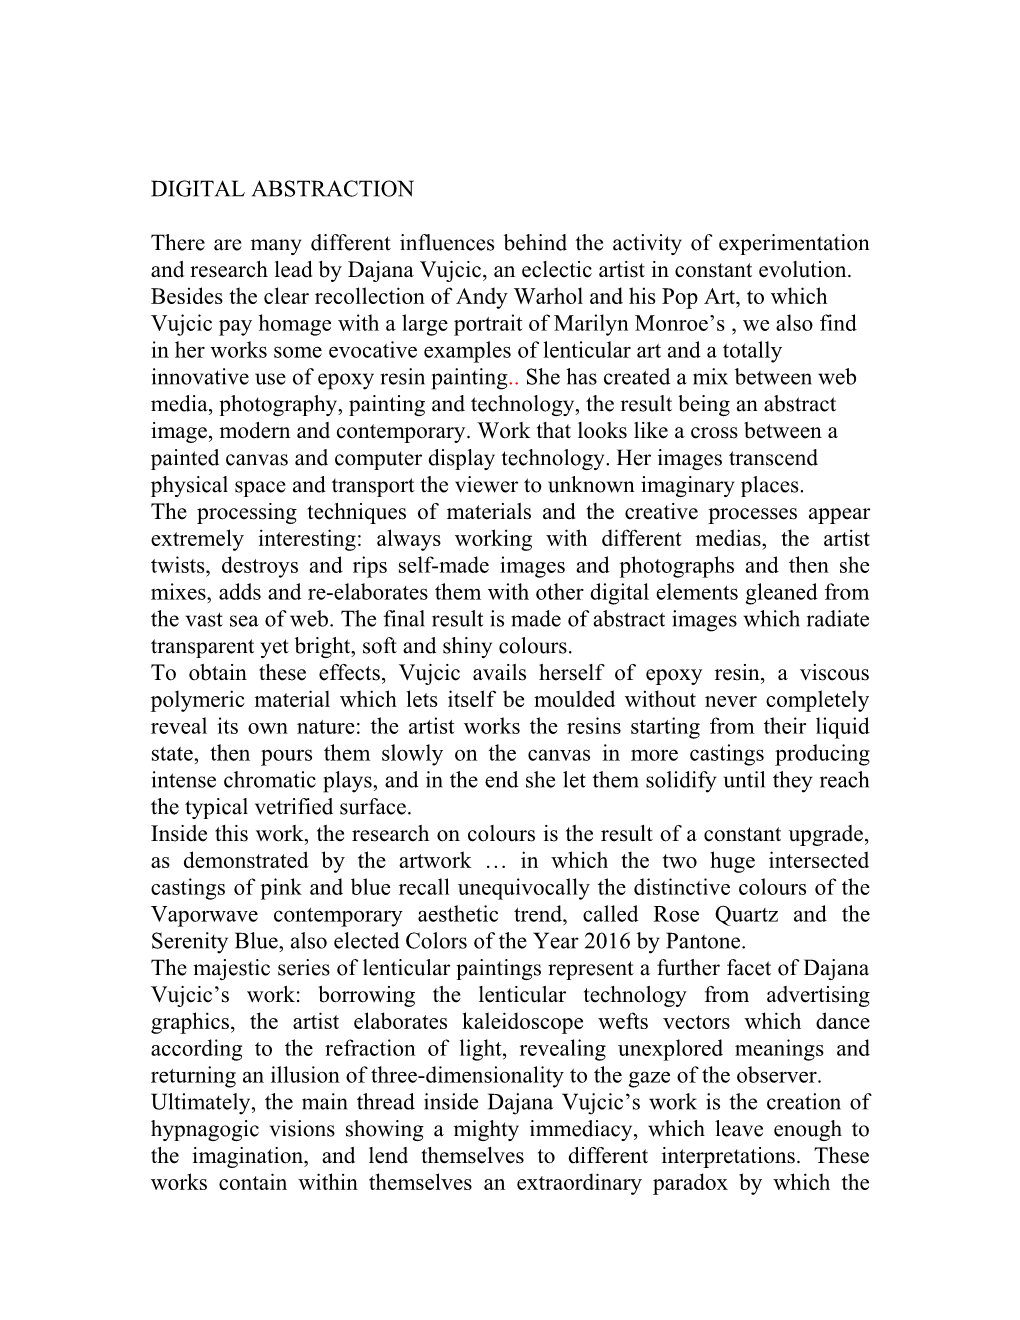 Digital Abstraction